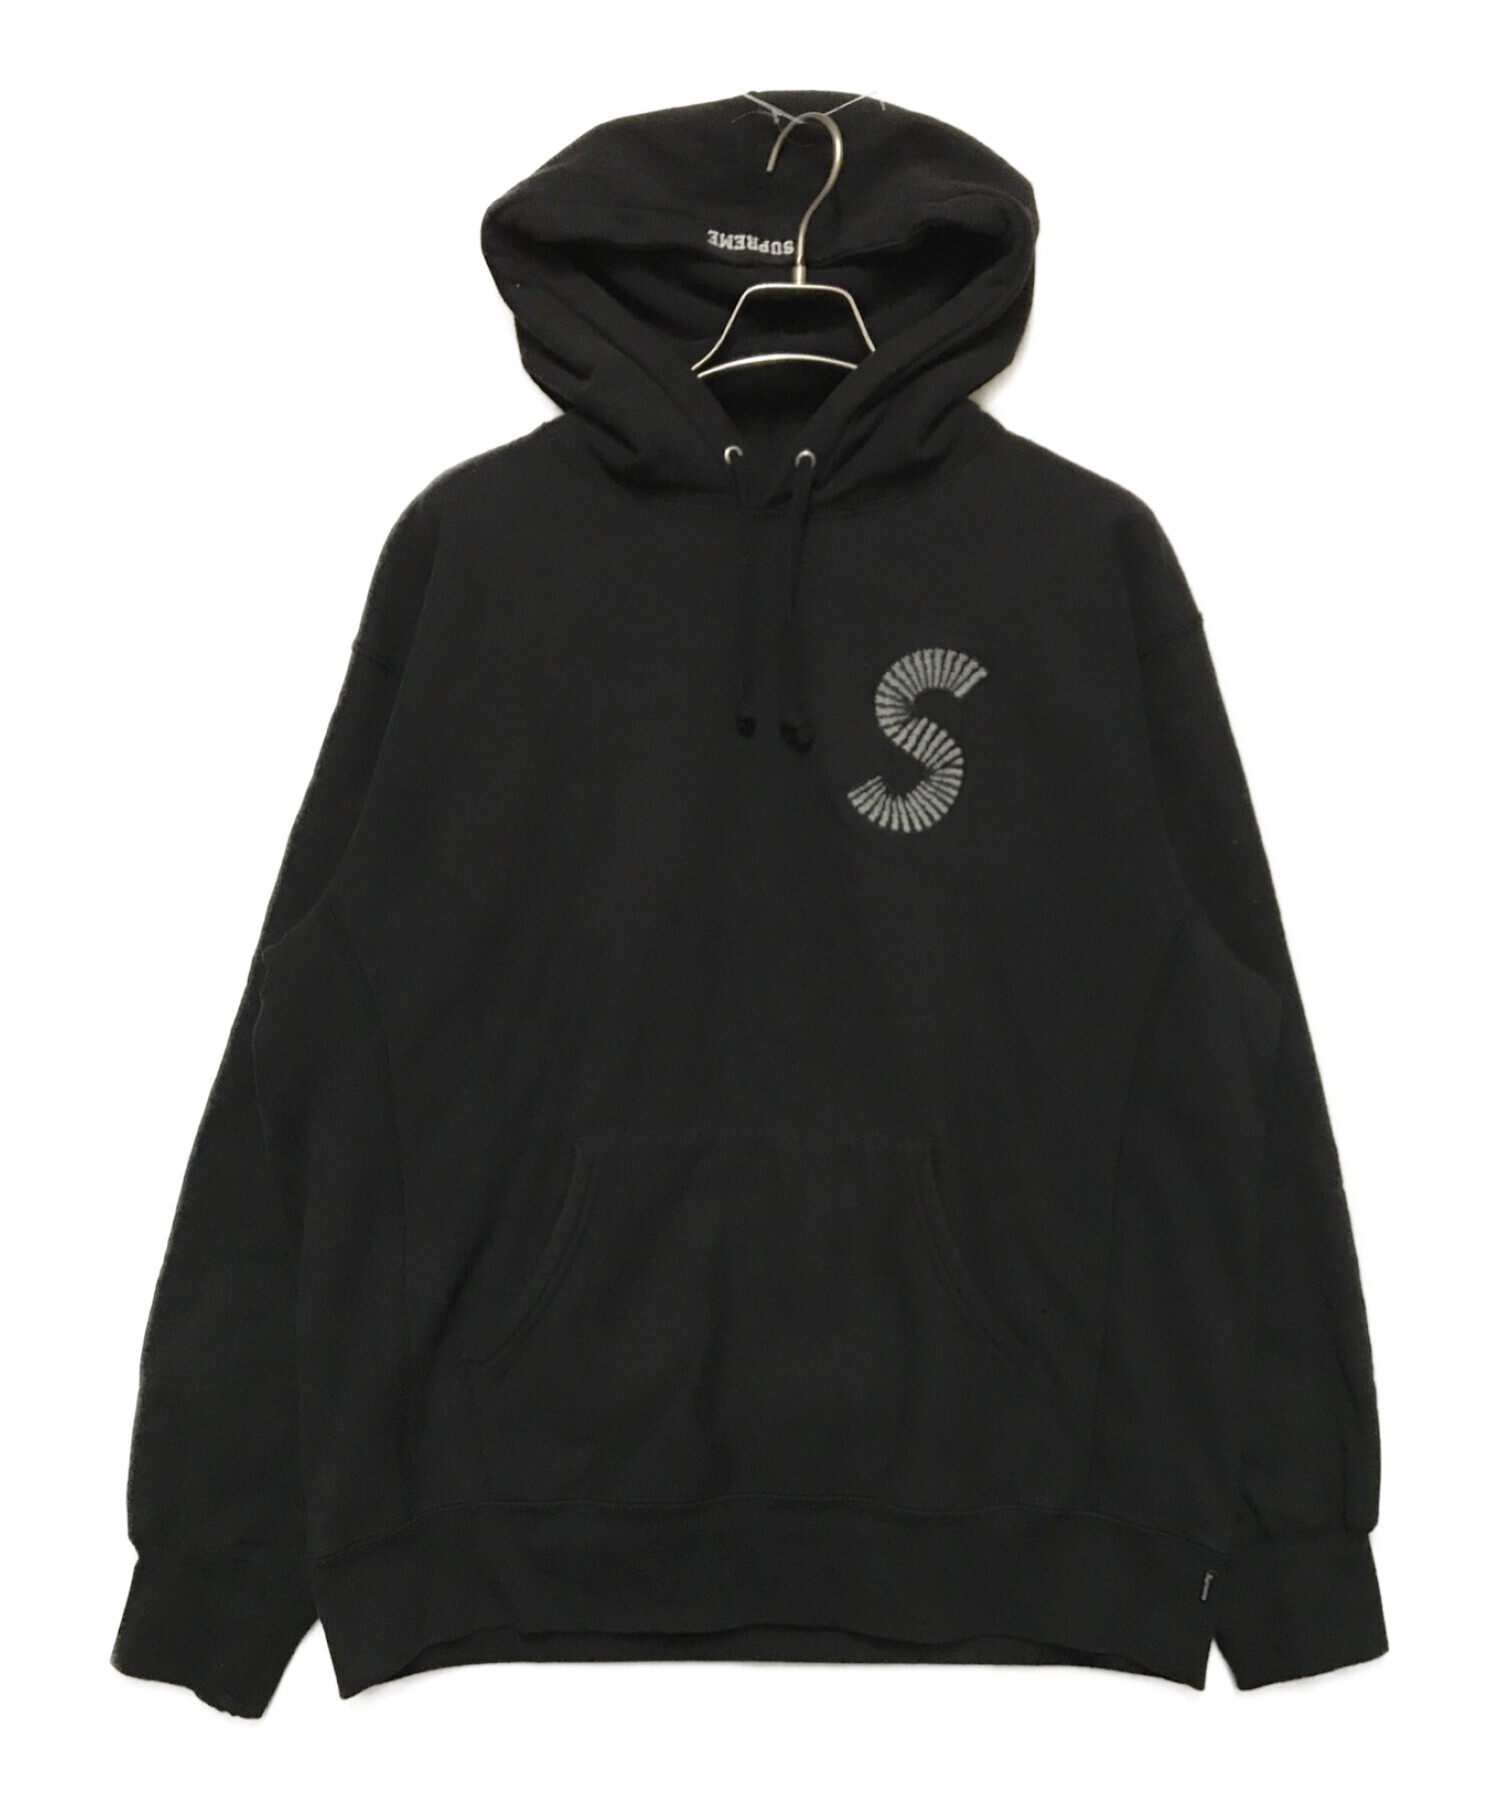 S Logo Hooded Sweatshirt Lサイズ